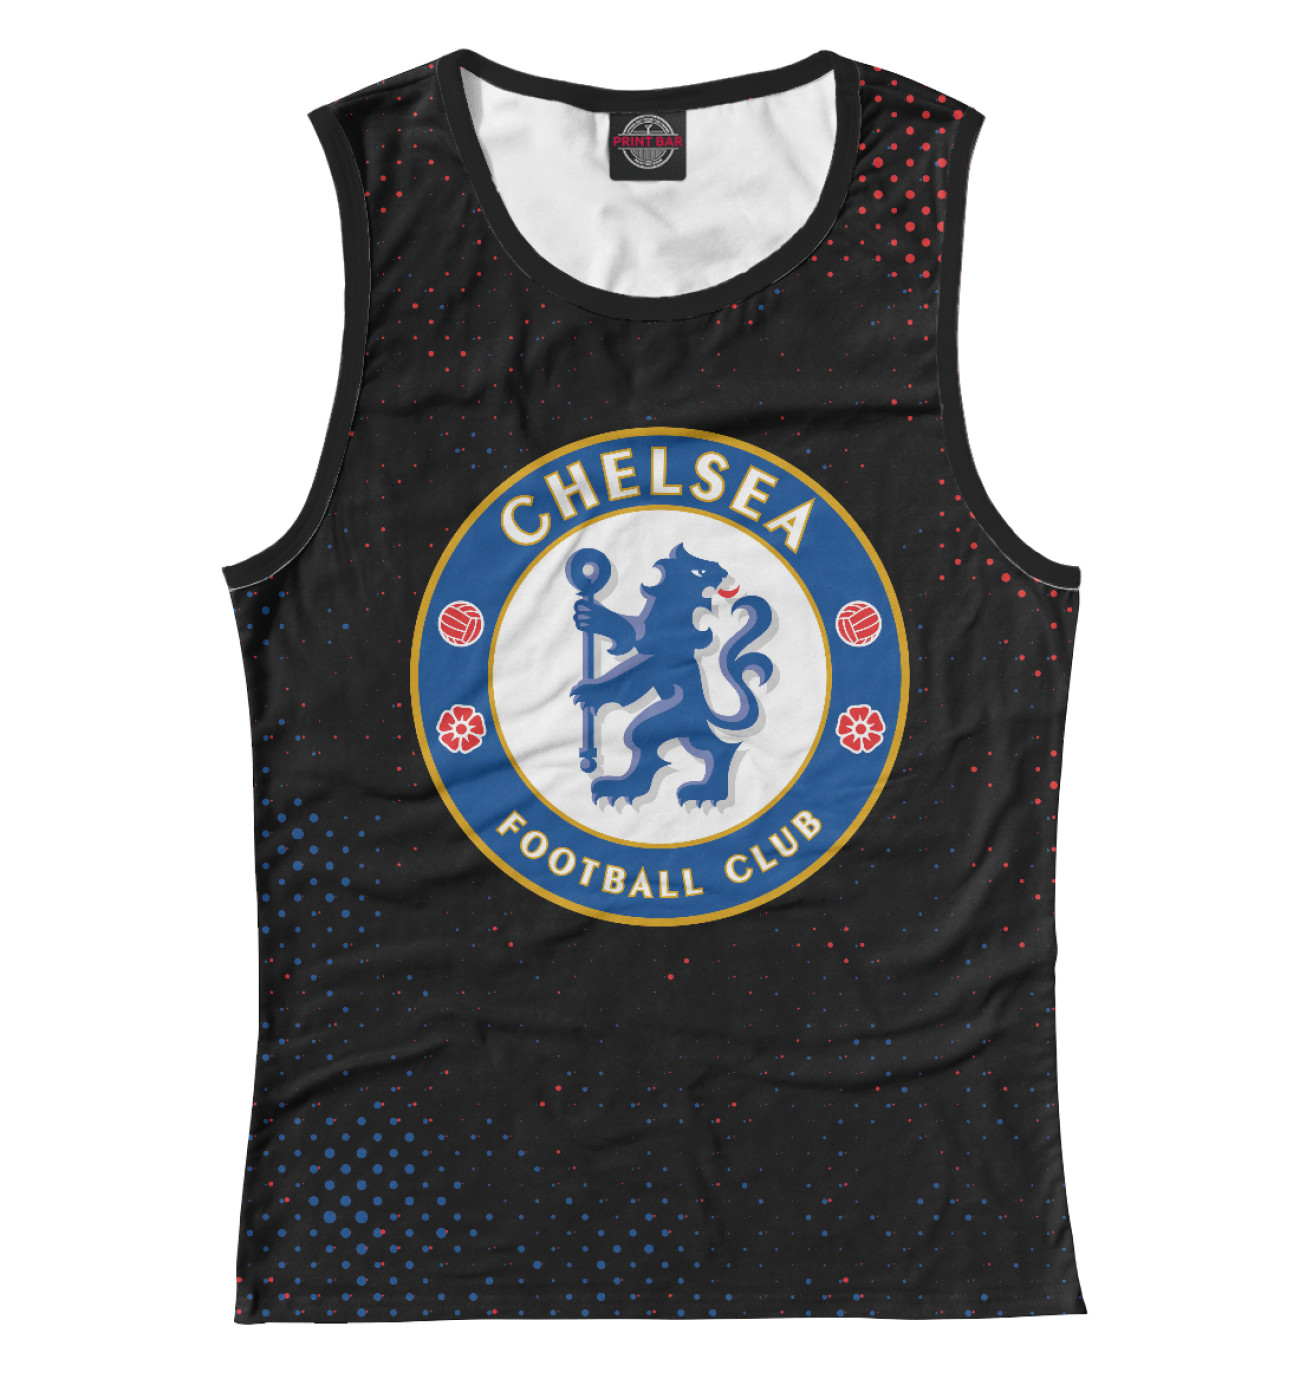 Женская Майка Chelsea F.C. / Челси, артикул: CHL-602836-may-1